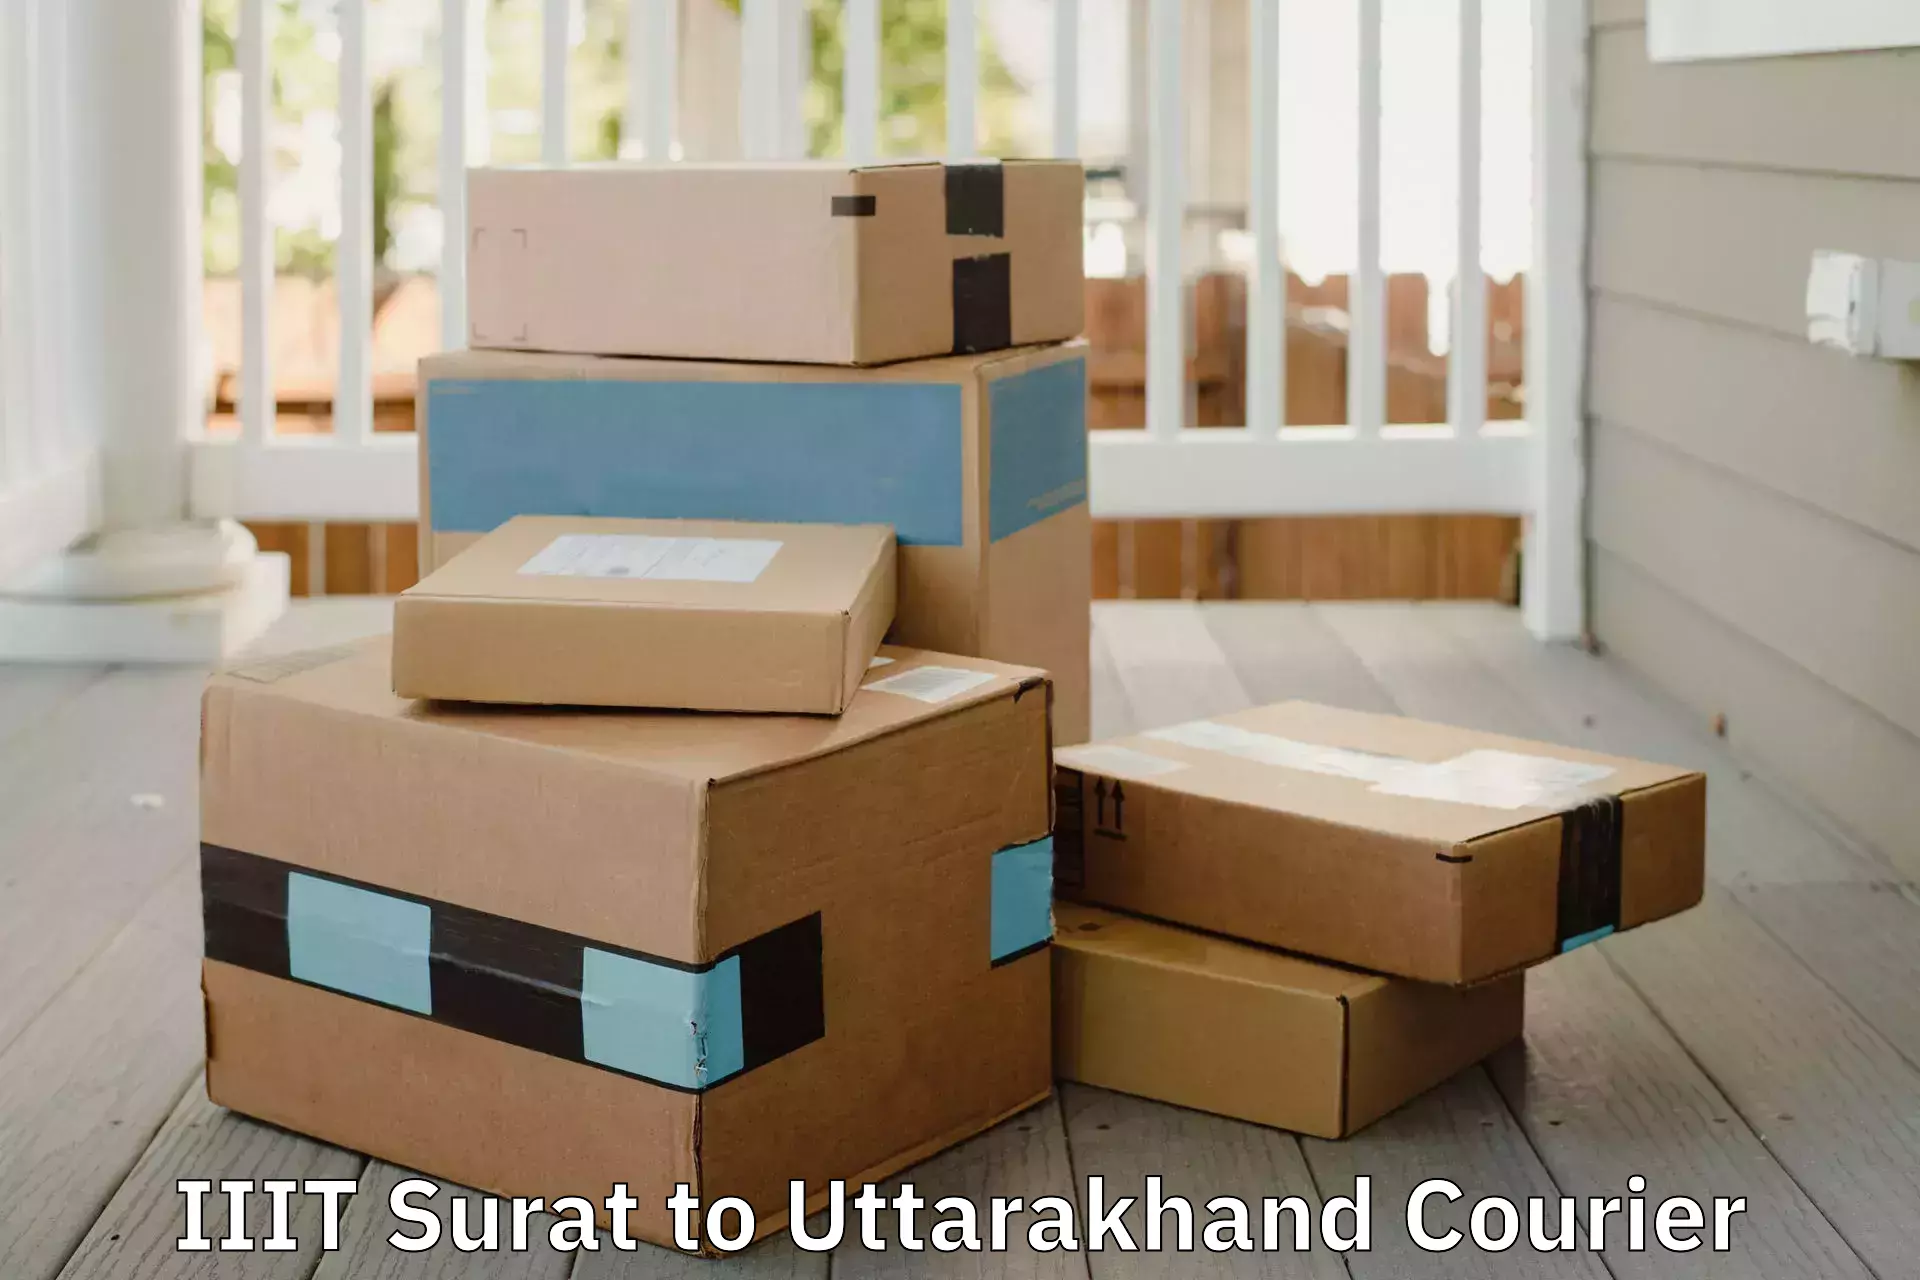 Quality moving and storage IIIT Surat to Uttarakhand